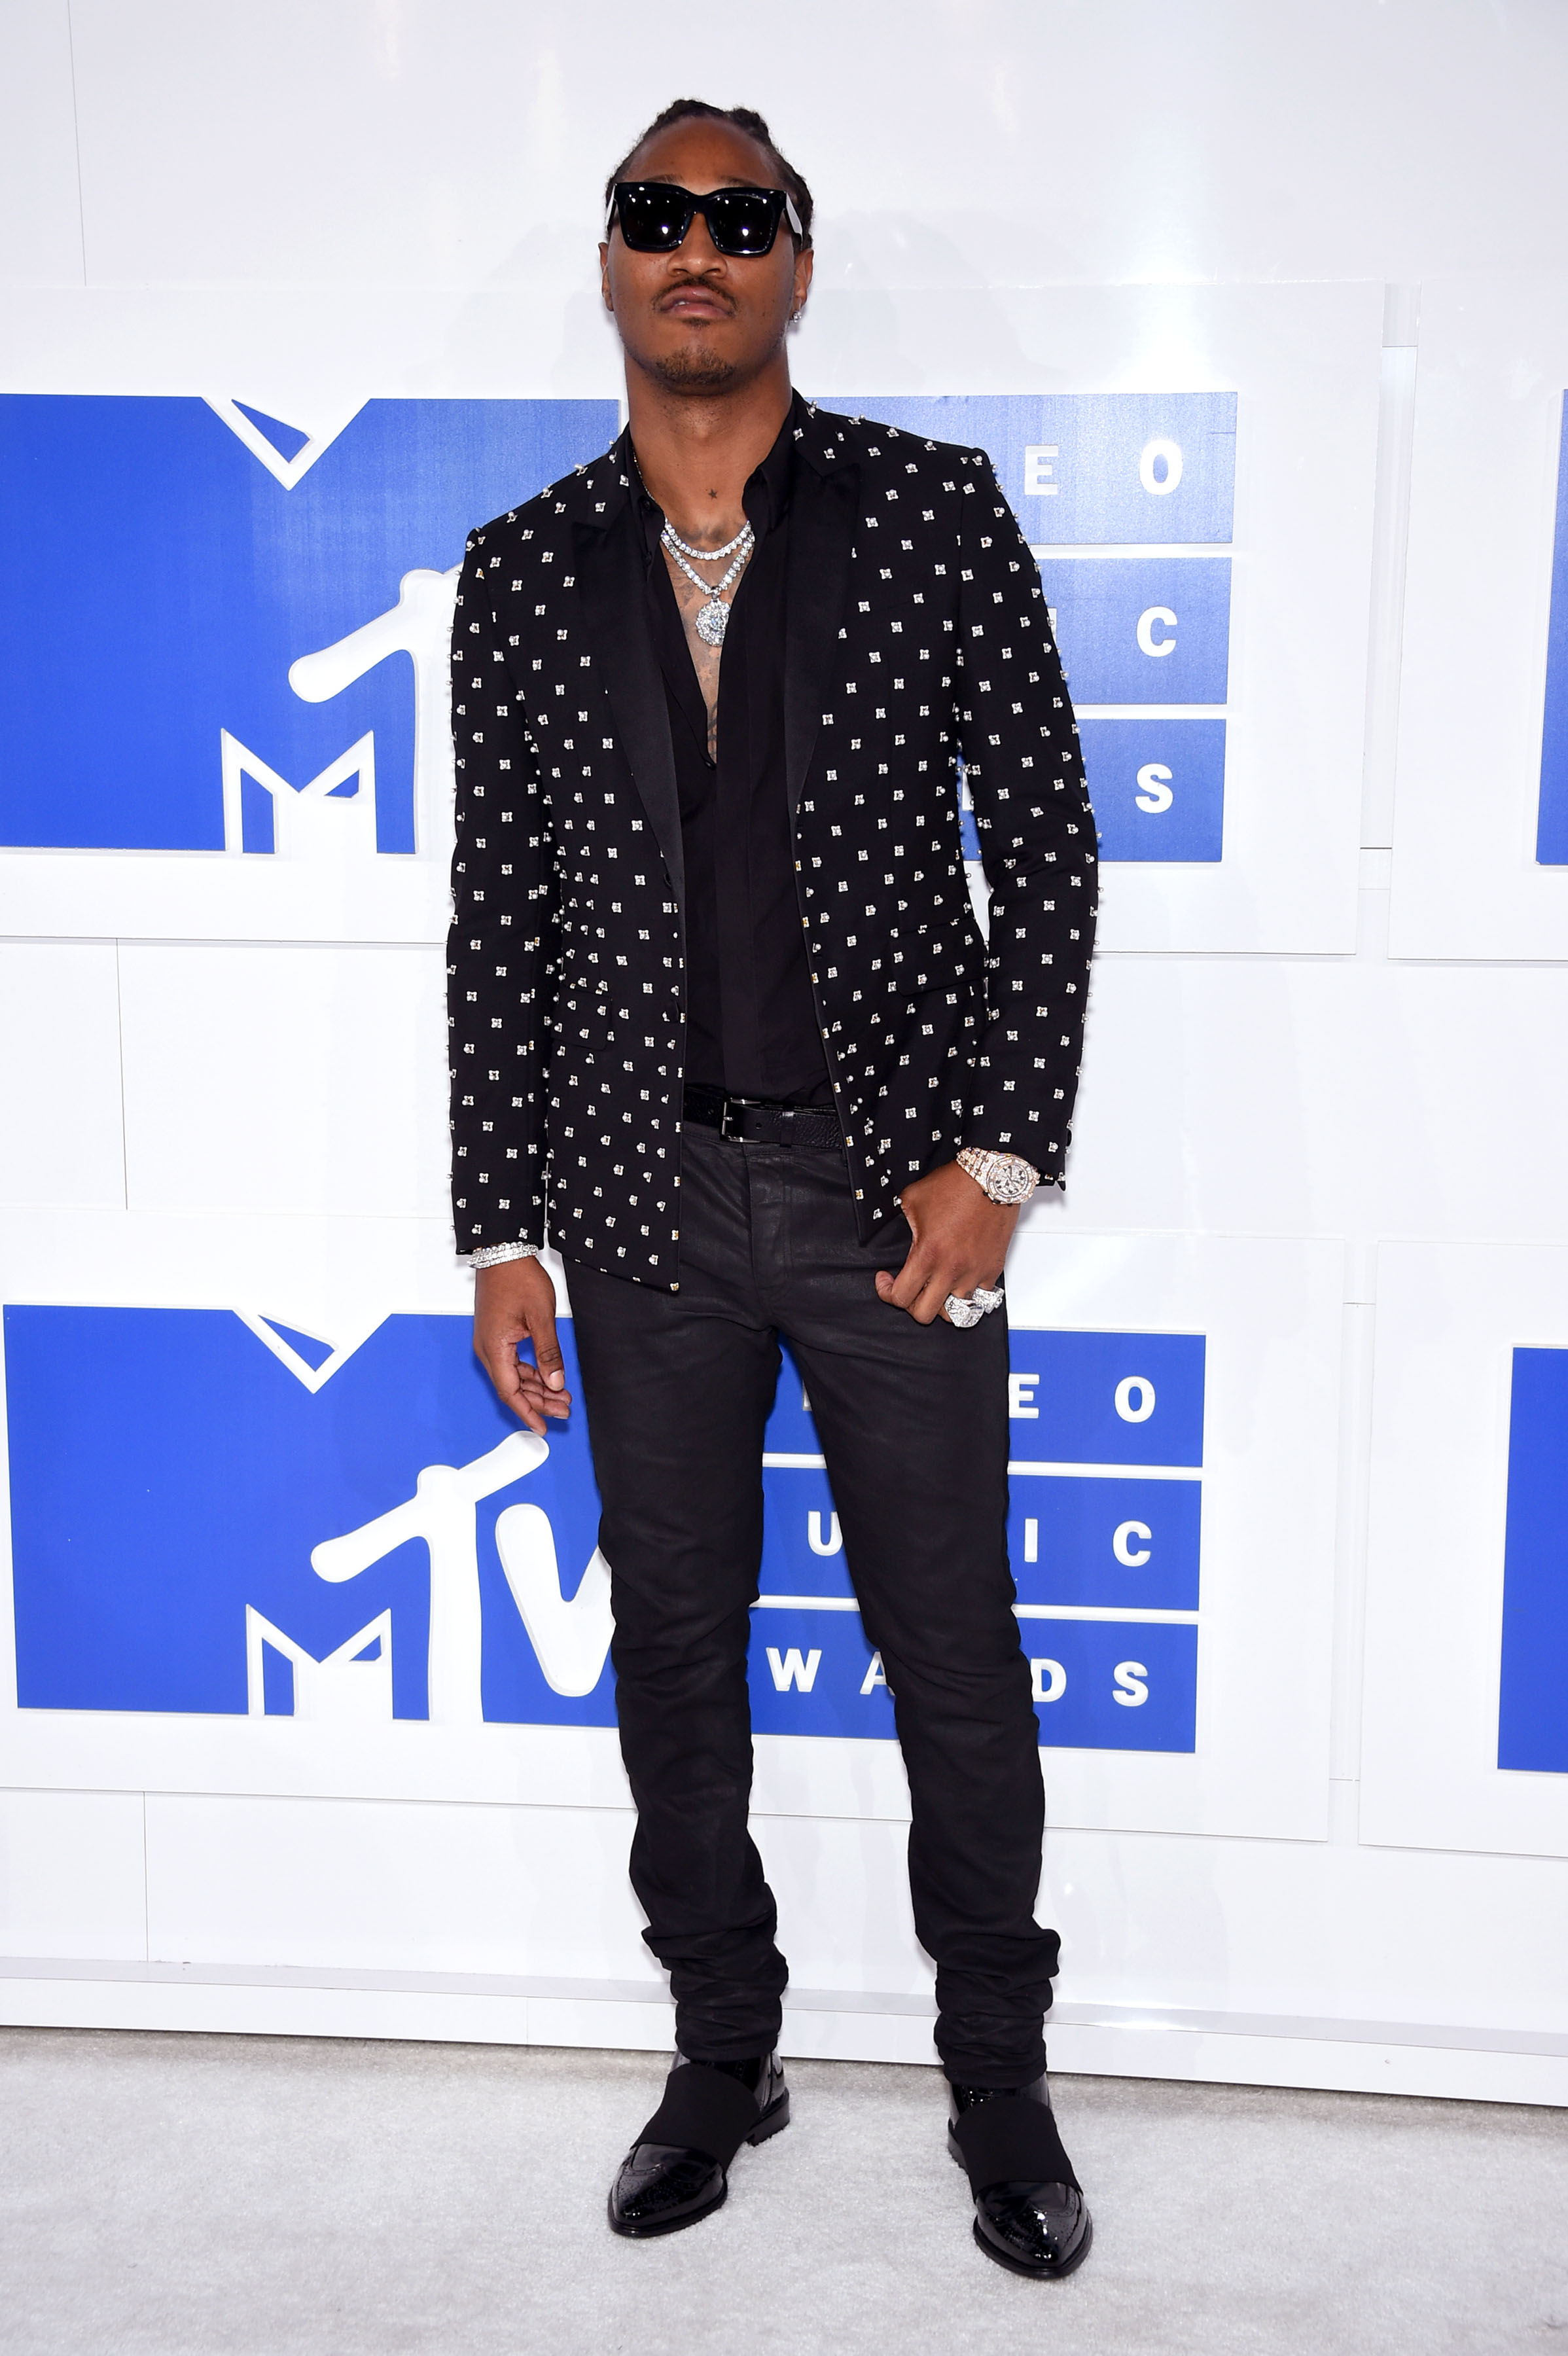 2016 MTV Video Music Awards - Arrivals